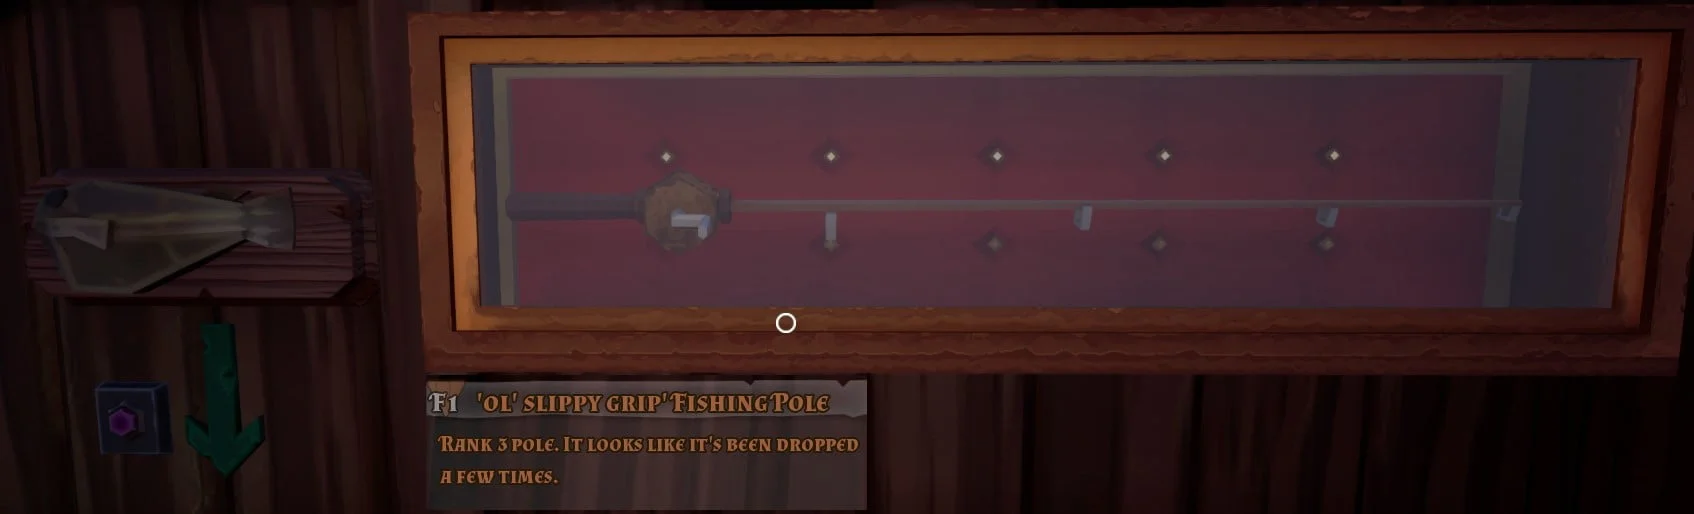 Easy Starting Money by Fishing (1.7)-5